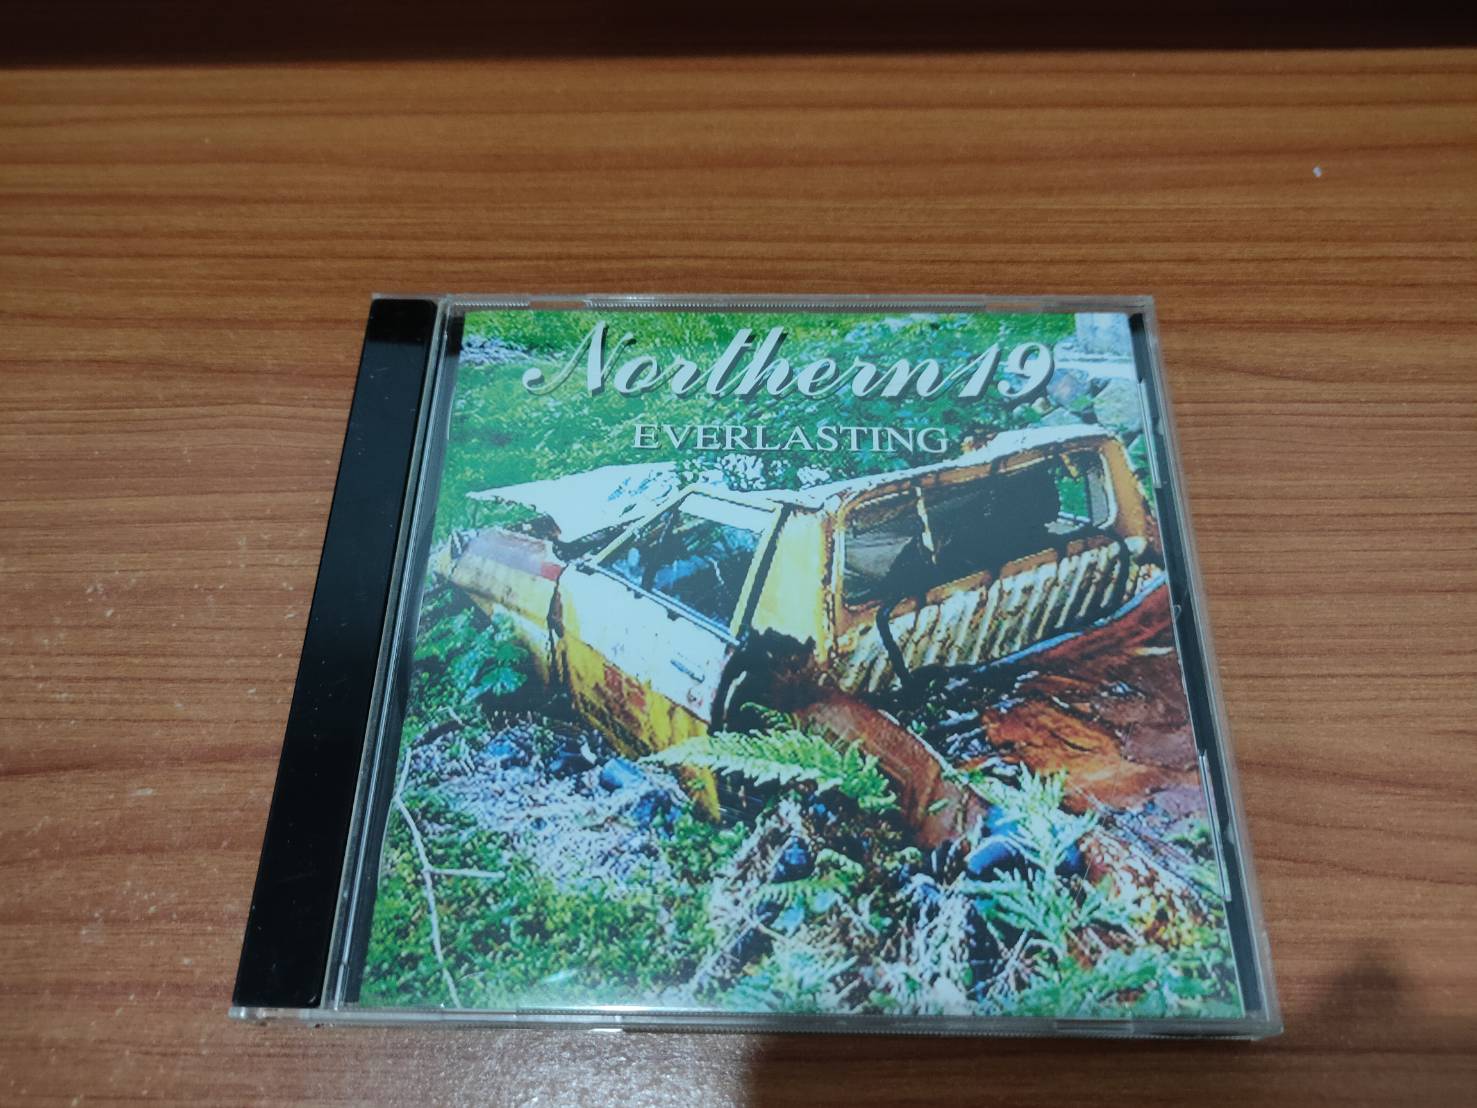 CD.MUSIC ซีดีเพลง เพลงสากล Northern 19 EVERLASTING